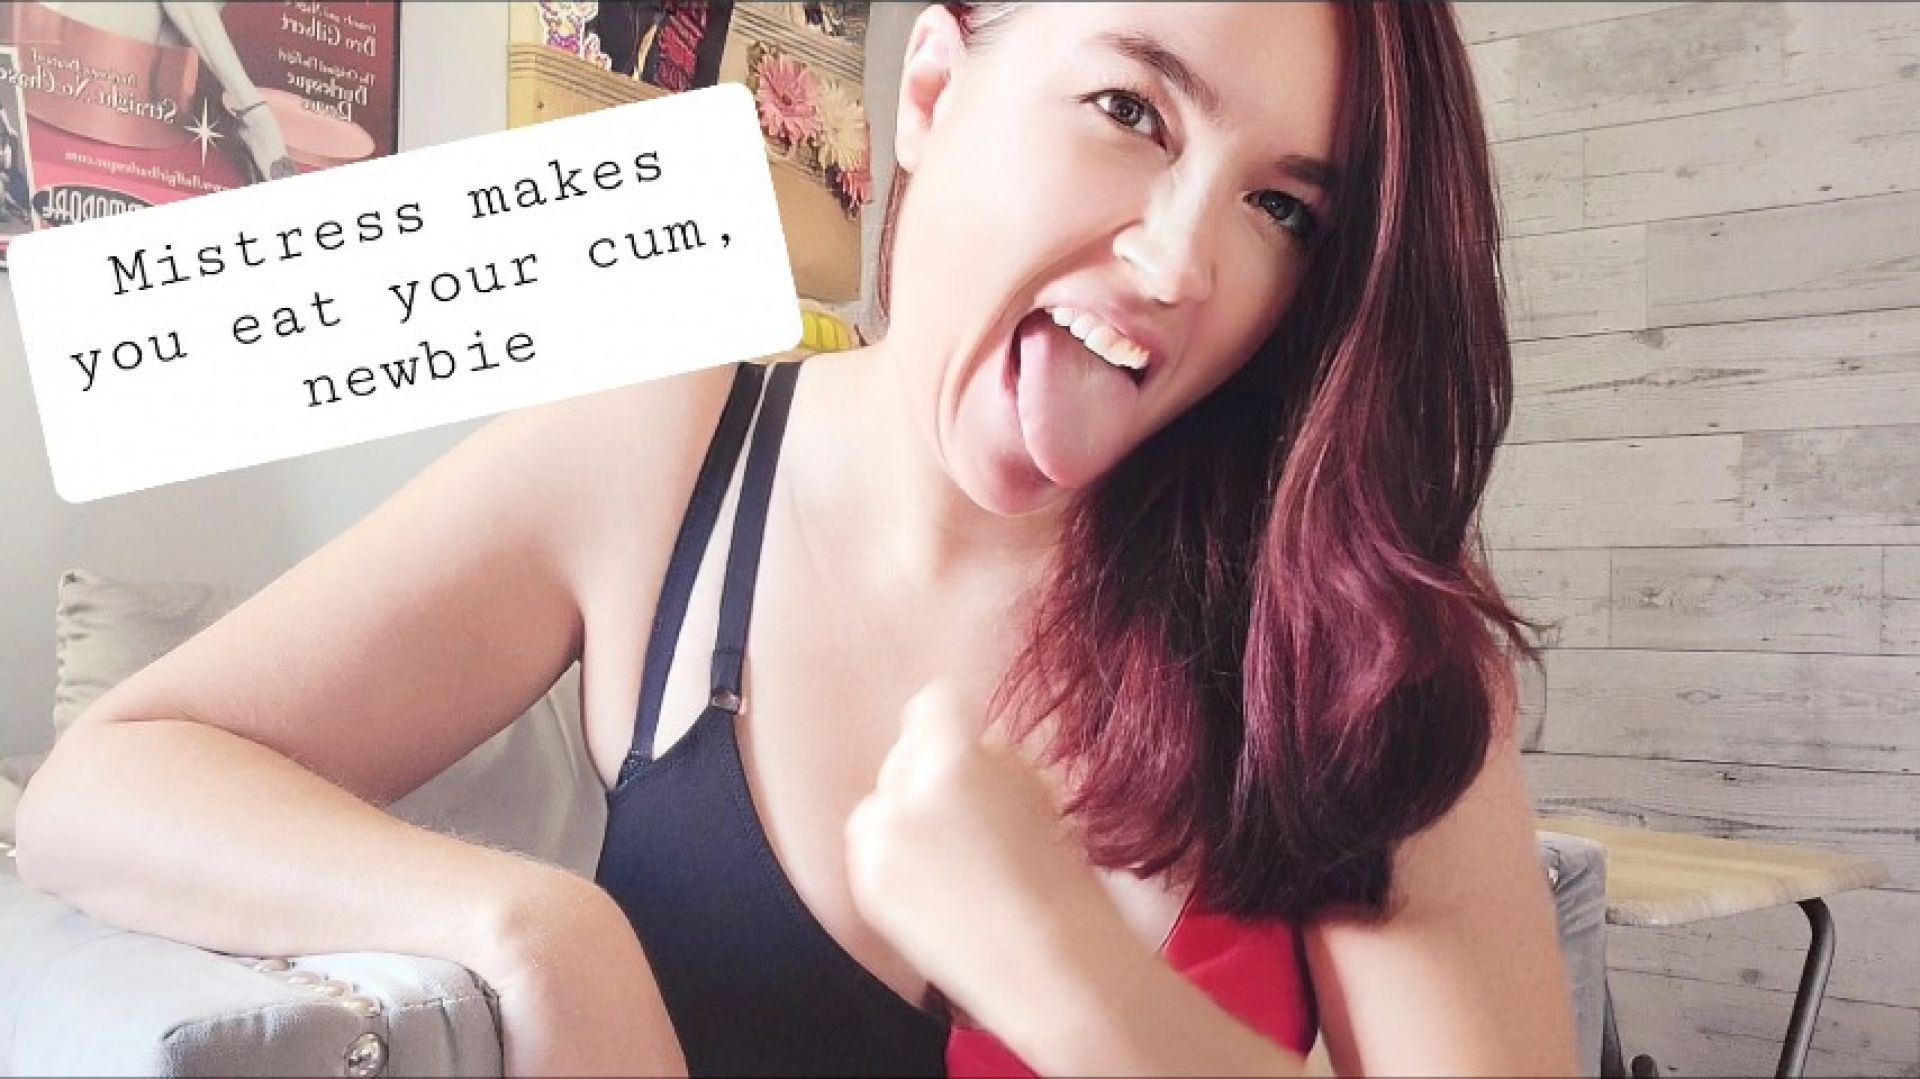 Mistress makes you eat your cum, newbie